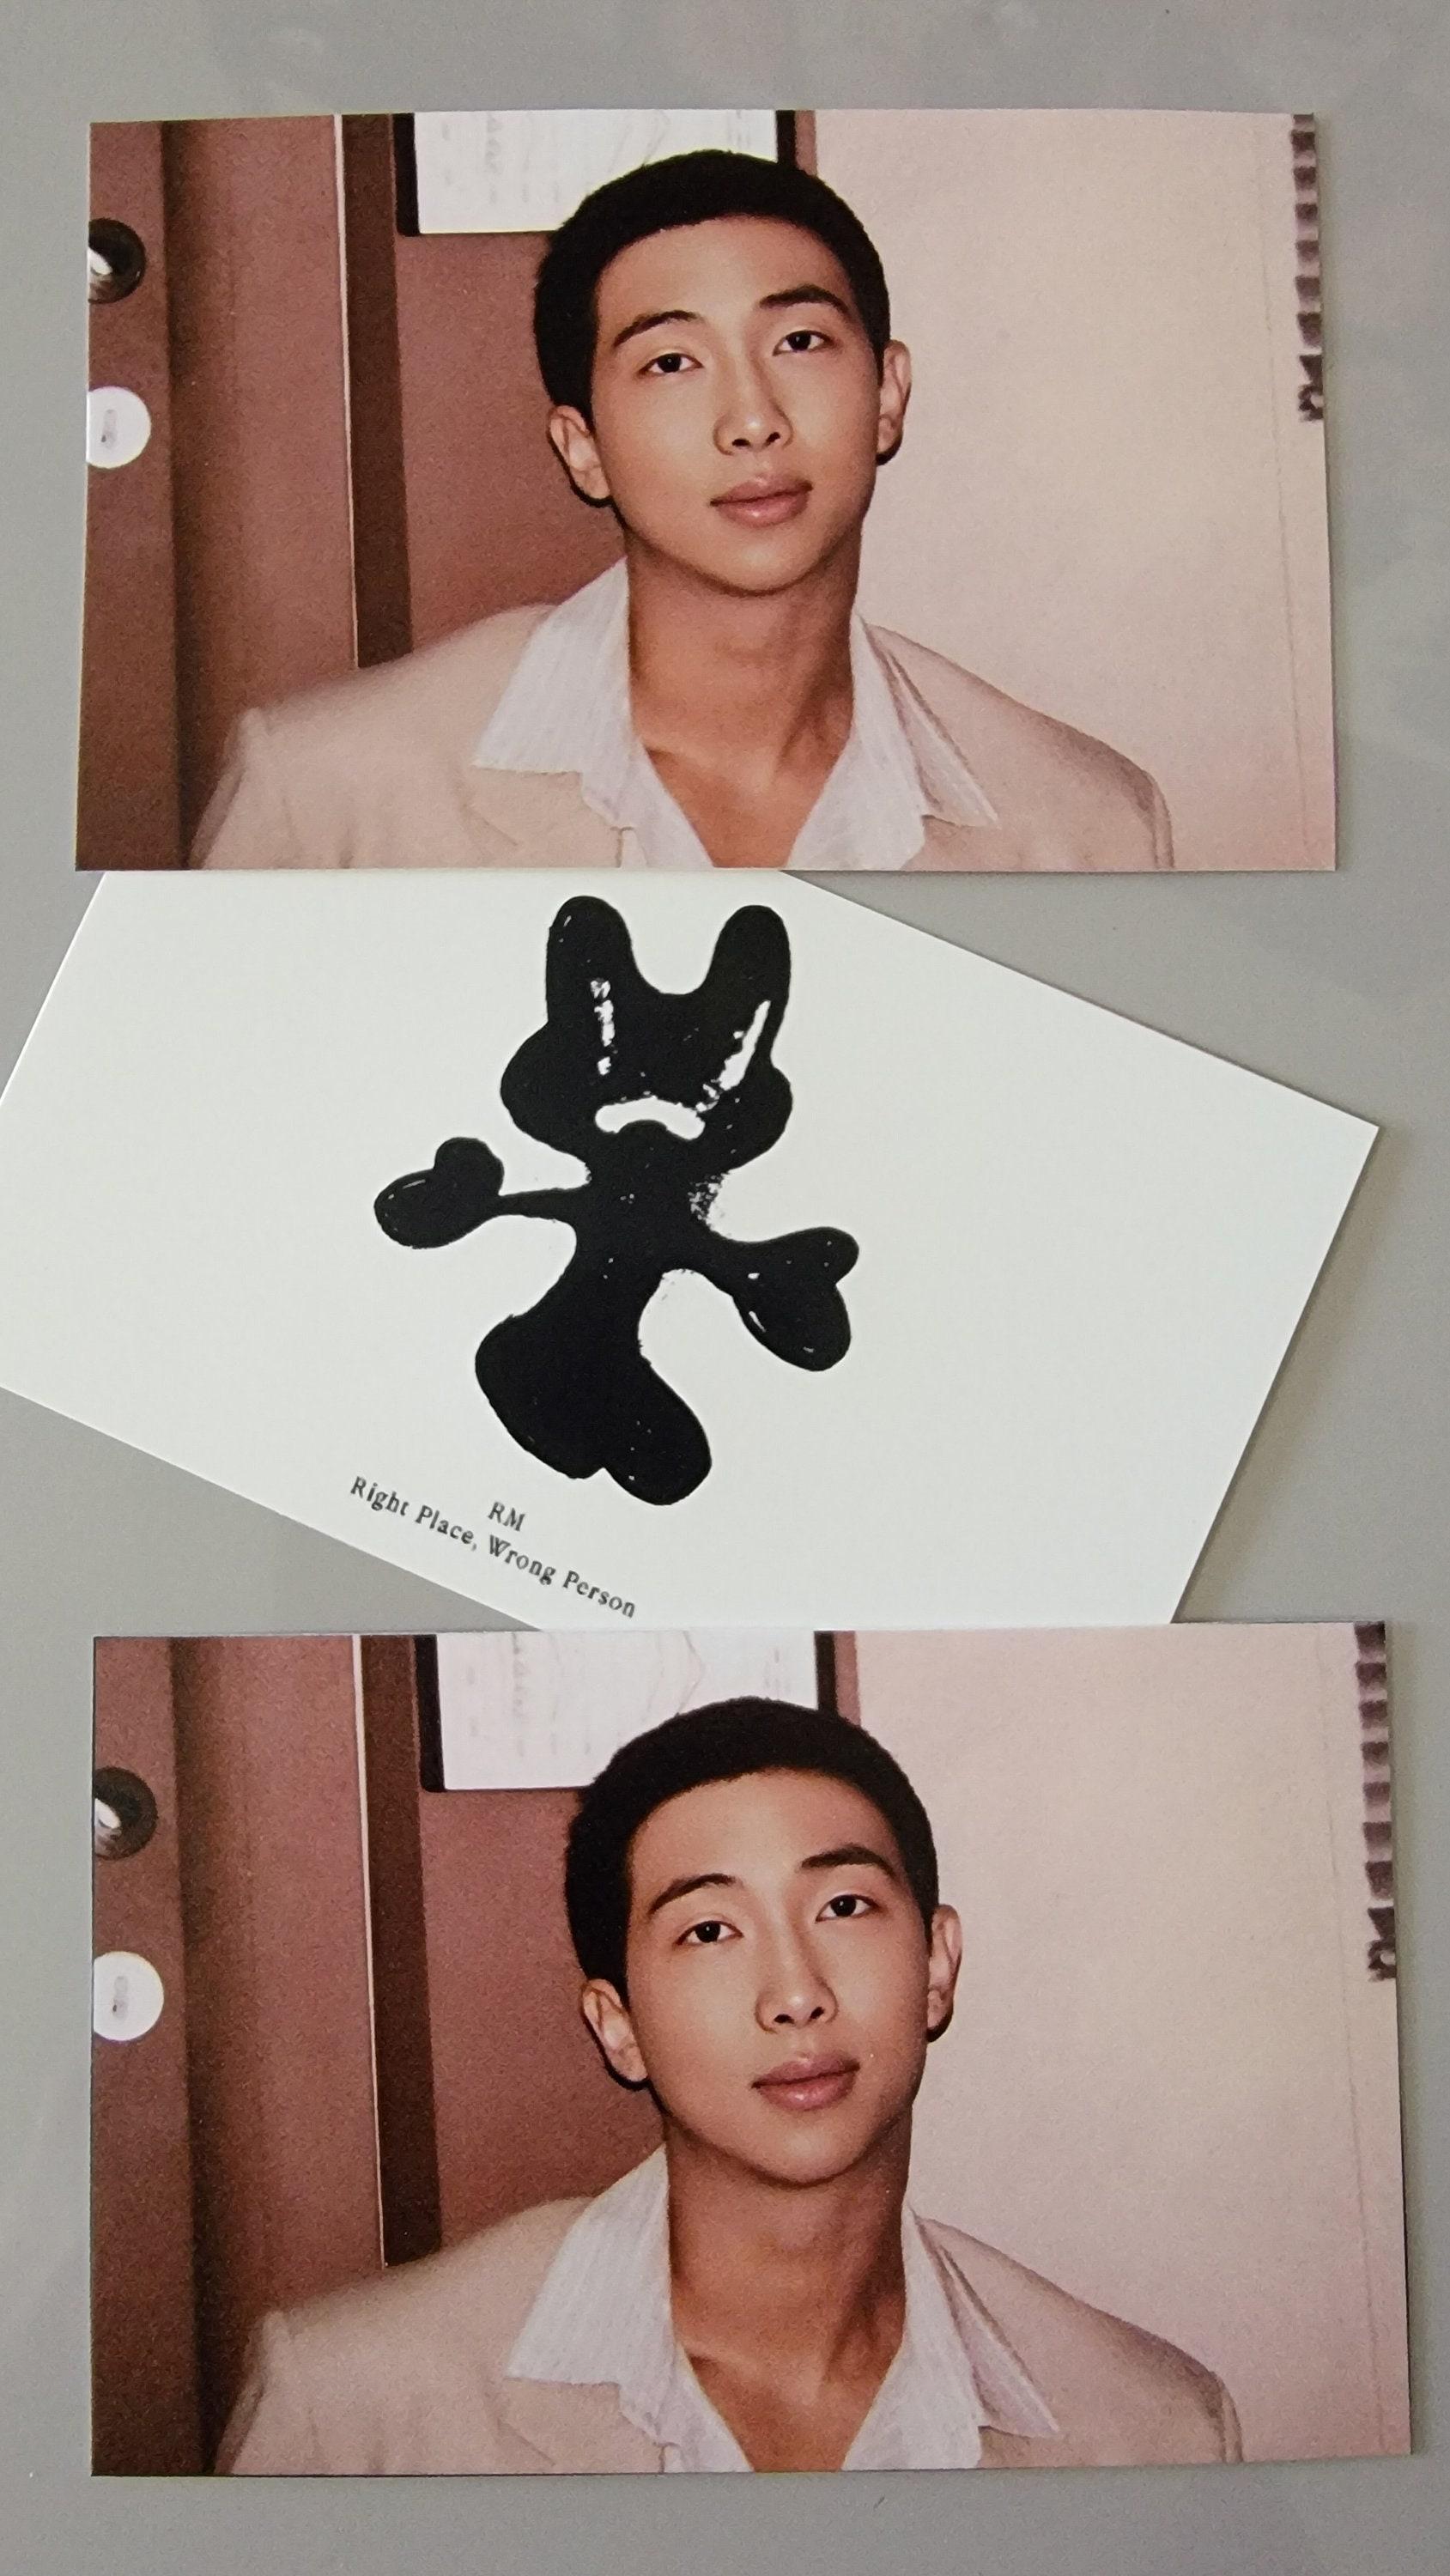 RM - RPWP : b & n exclusive Photo Card